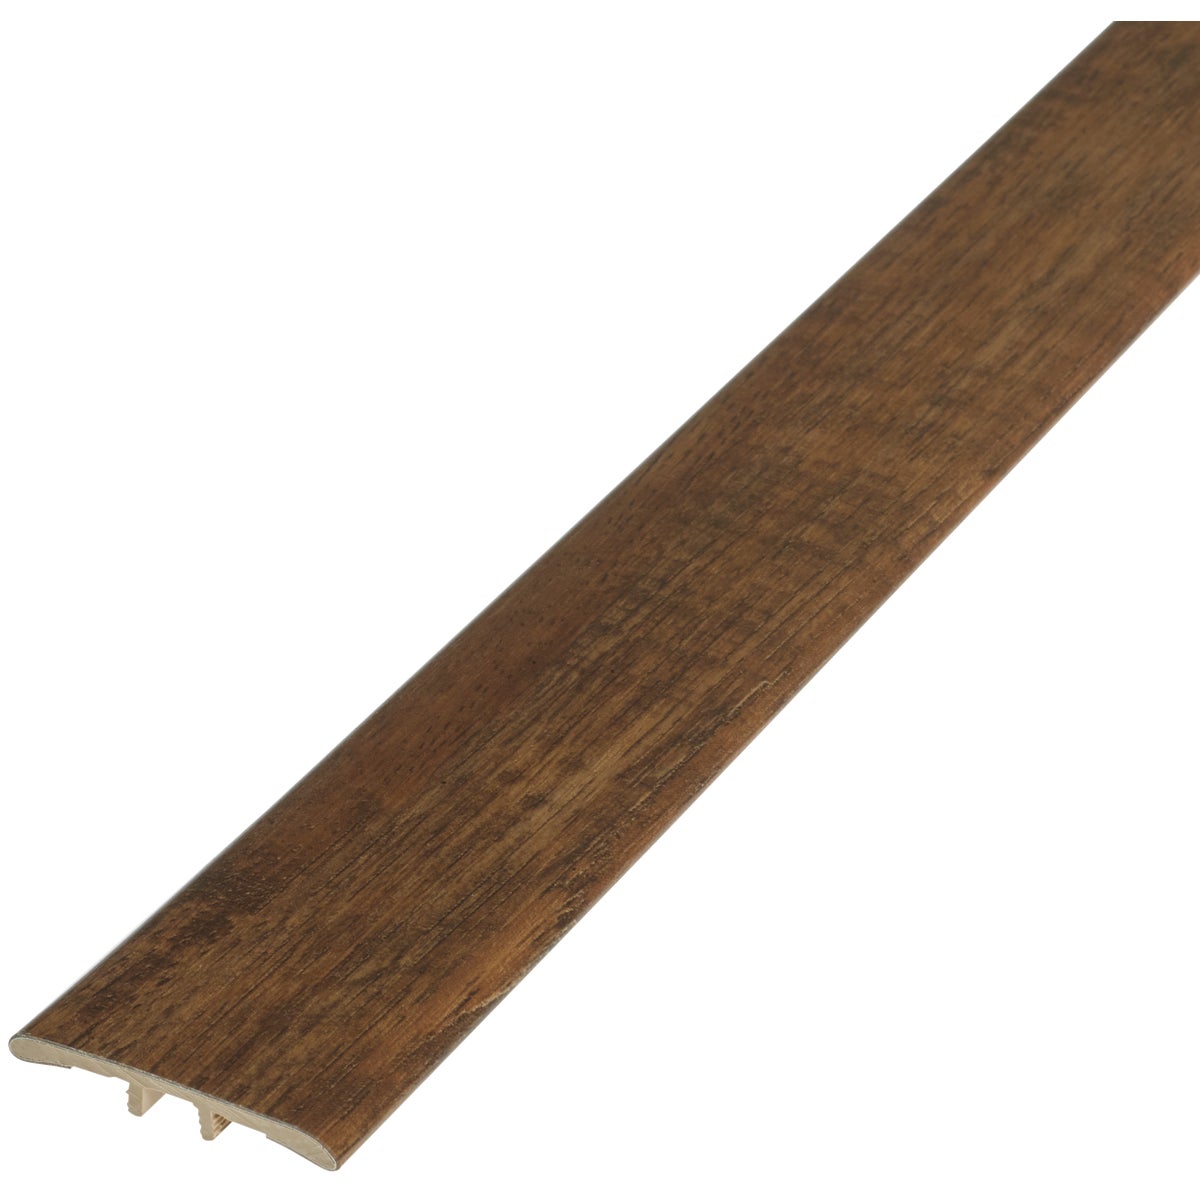 Shaw Endura Smoky Oak 1-3/4 In. W x 94 In. L T Mold Vinyl Floor Plank Trim